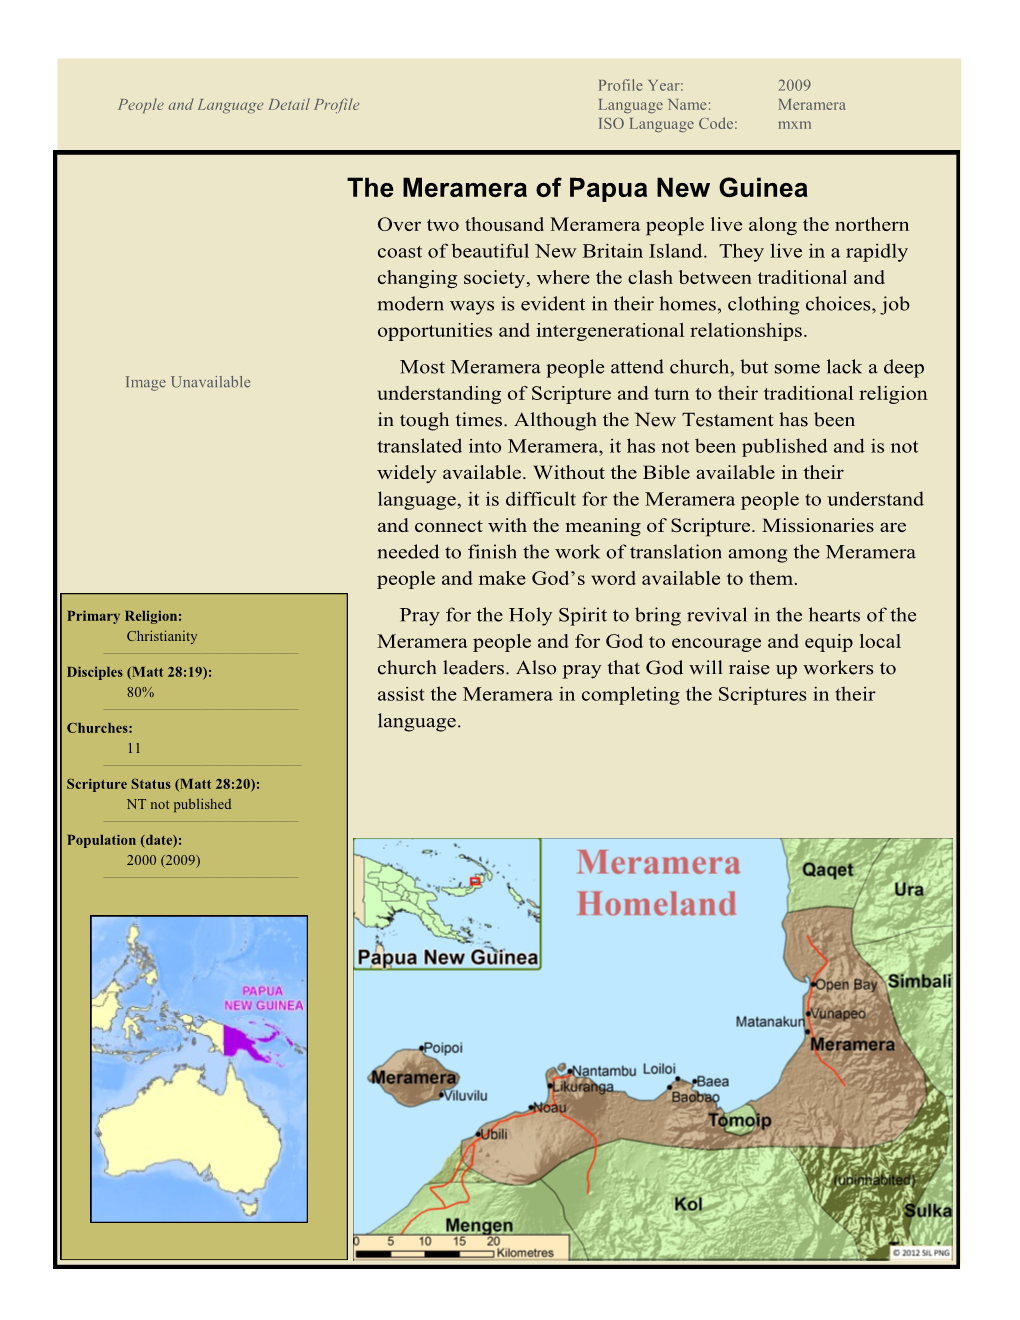 The Meramera of Papua New Guinea Over Two Thousand Meramera People Live Along the Northern Coast of Beautiful New Britain Island